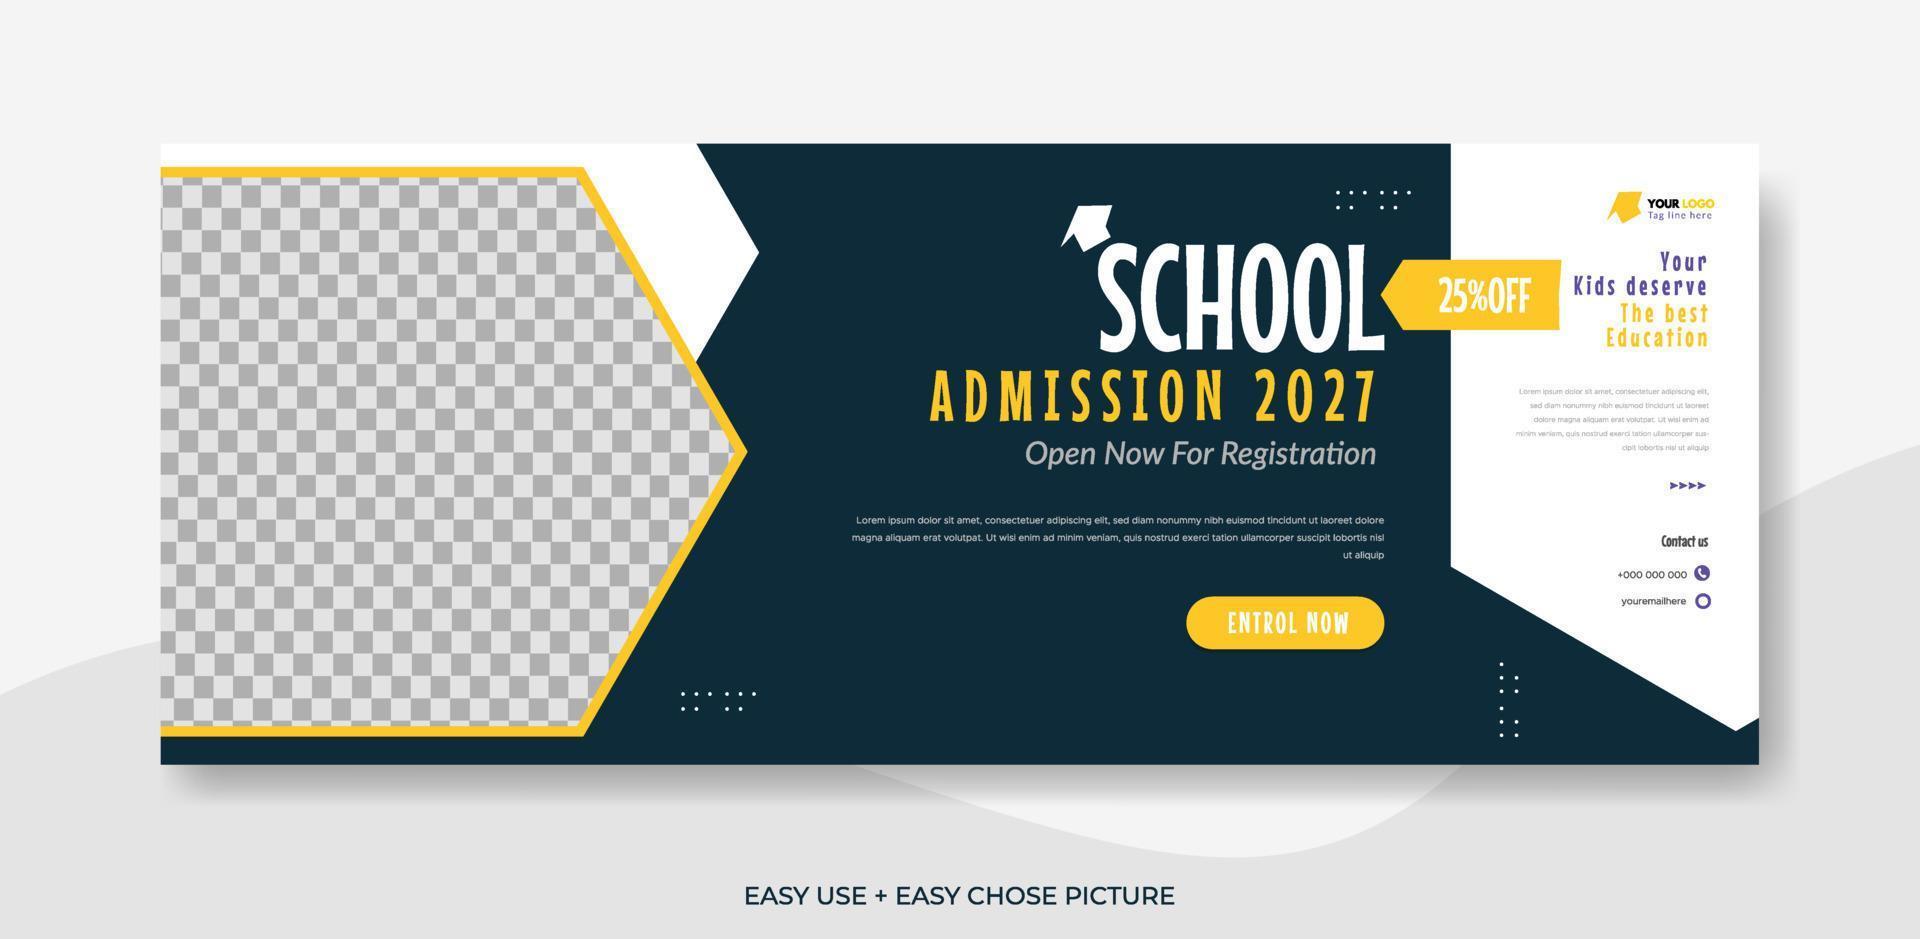 School admission web banner template design illustration vector